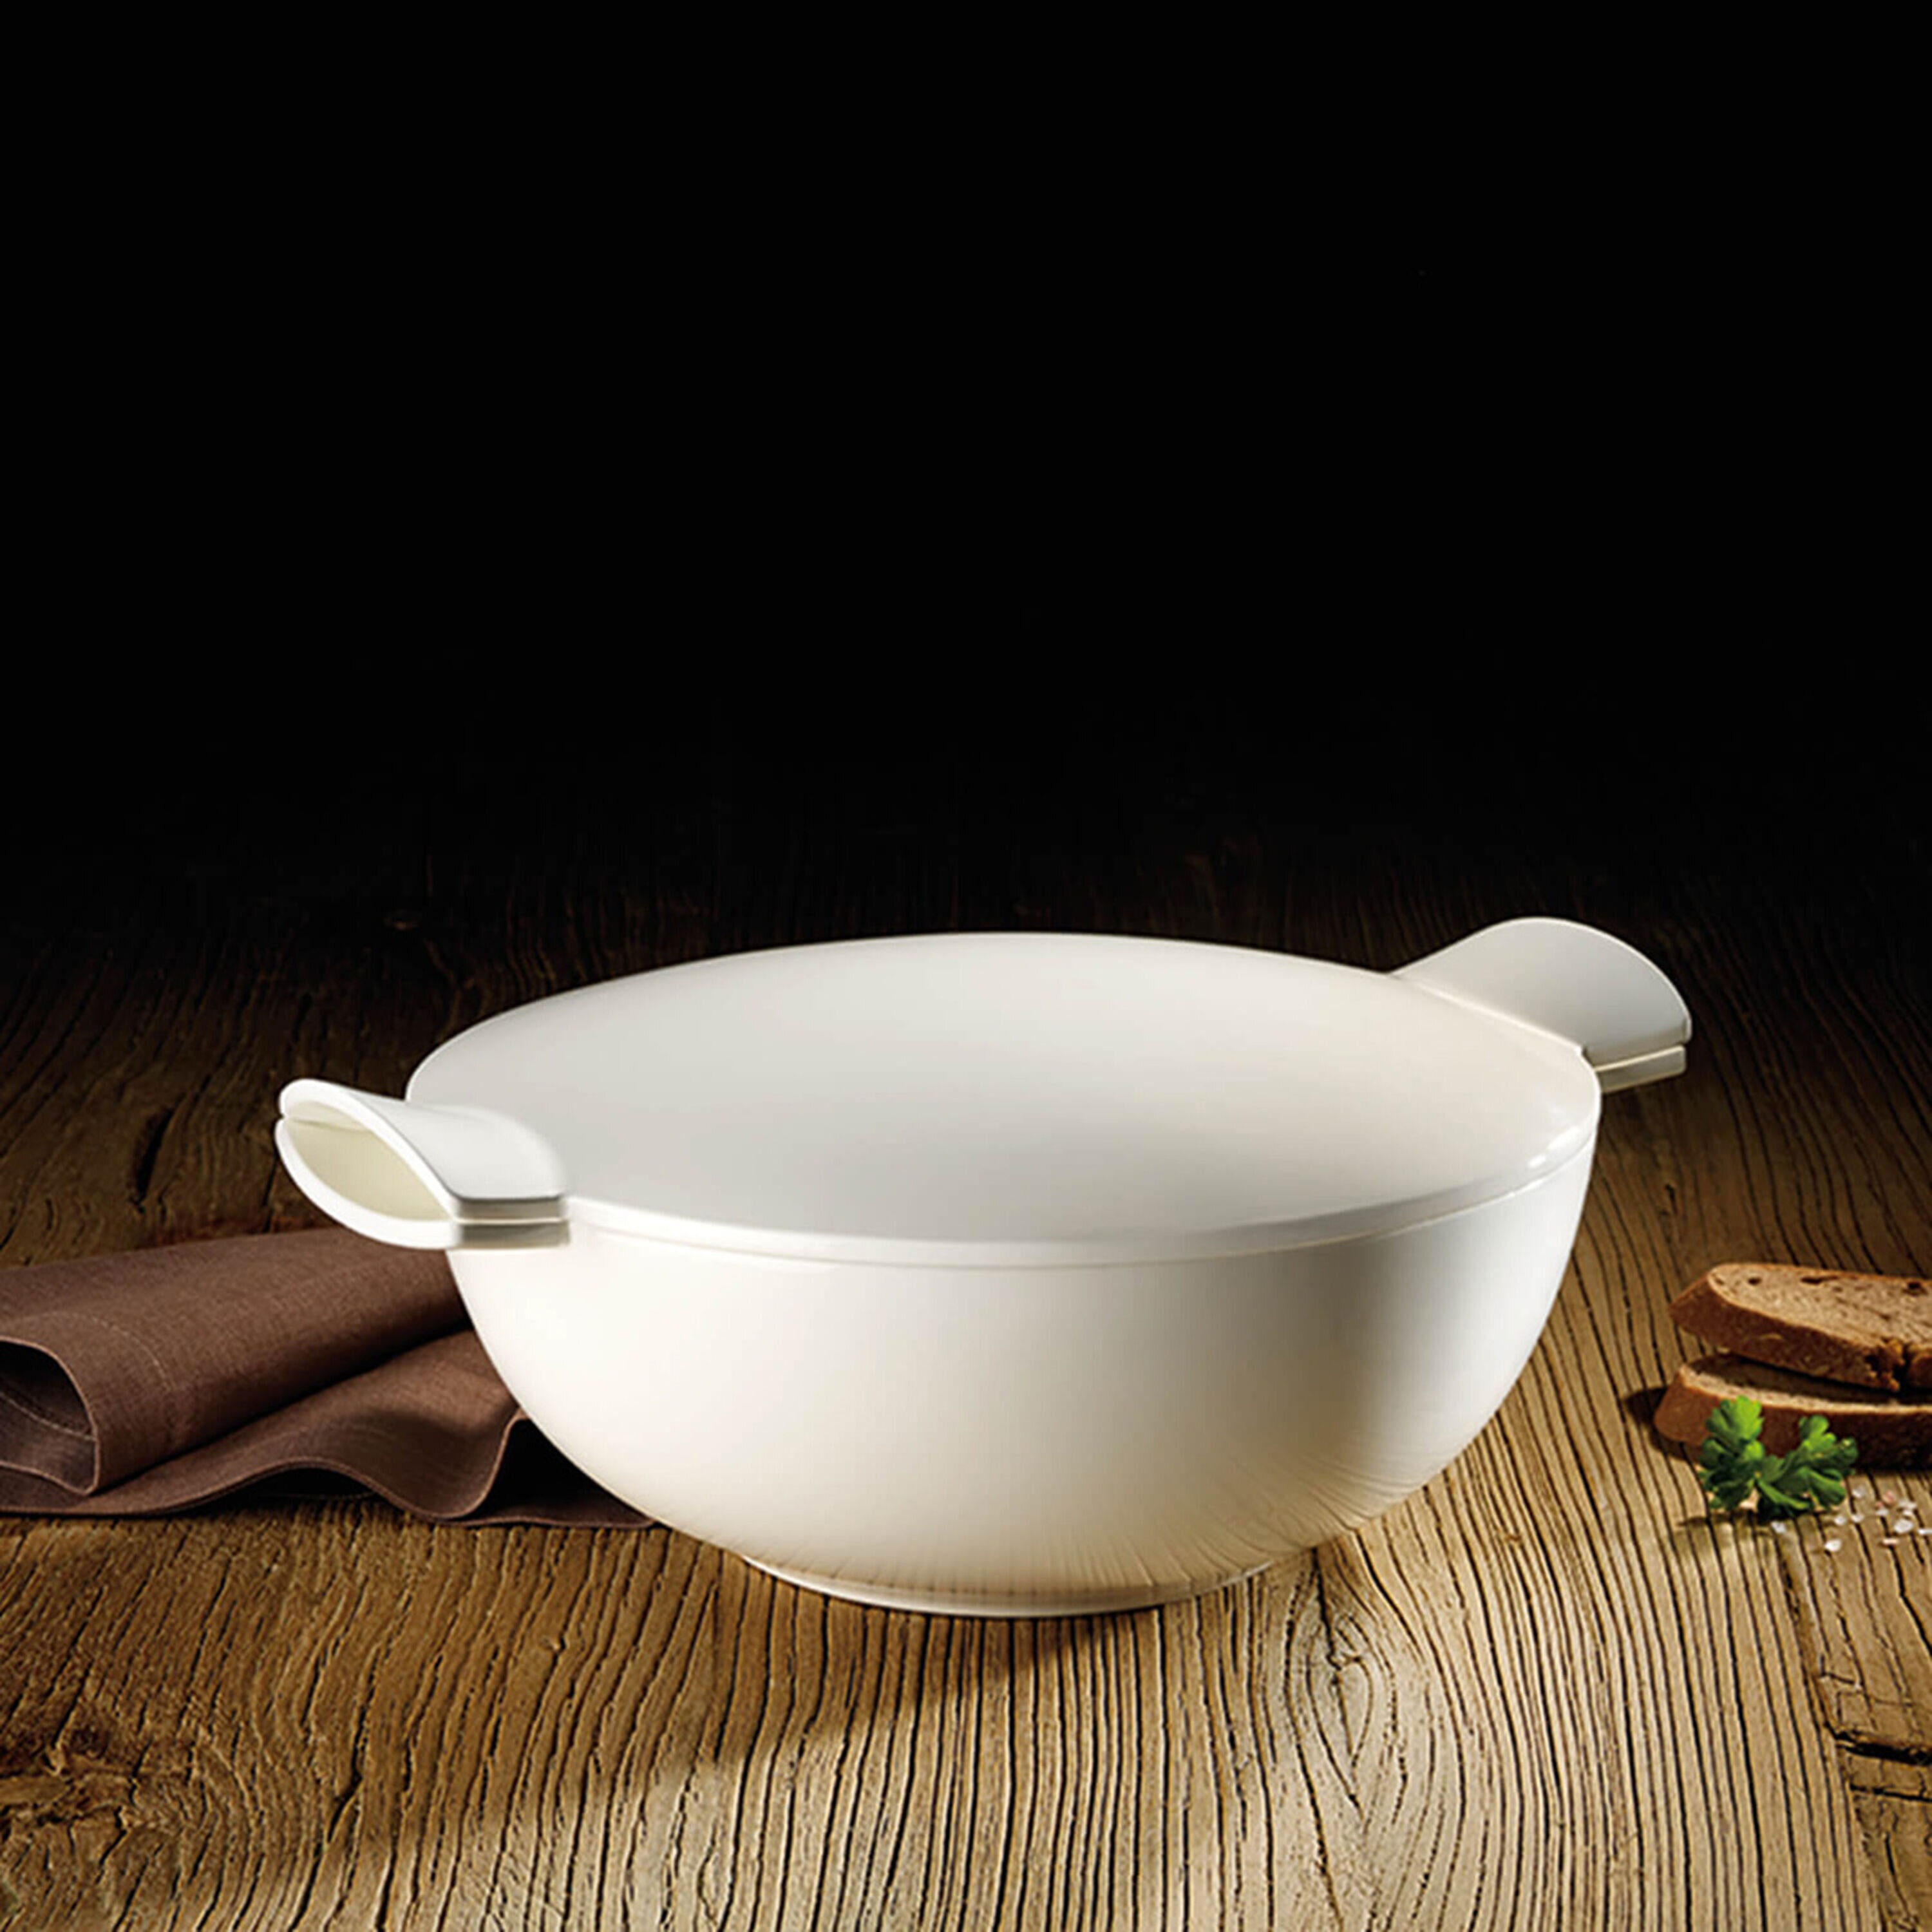 https://visualhunt.com/photos/23/villeroy-boch-soup-passion-porcelain-china-serving-bowl.jpg